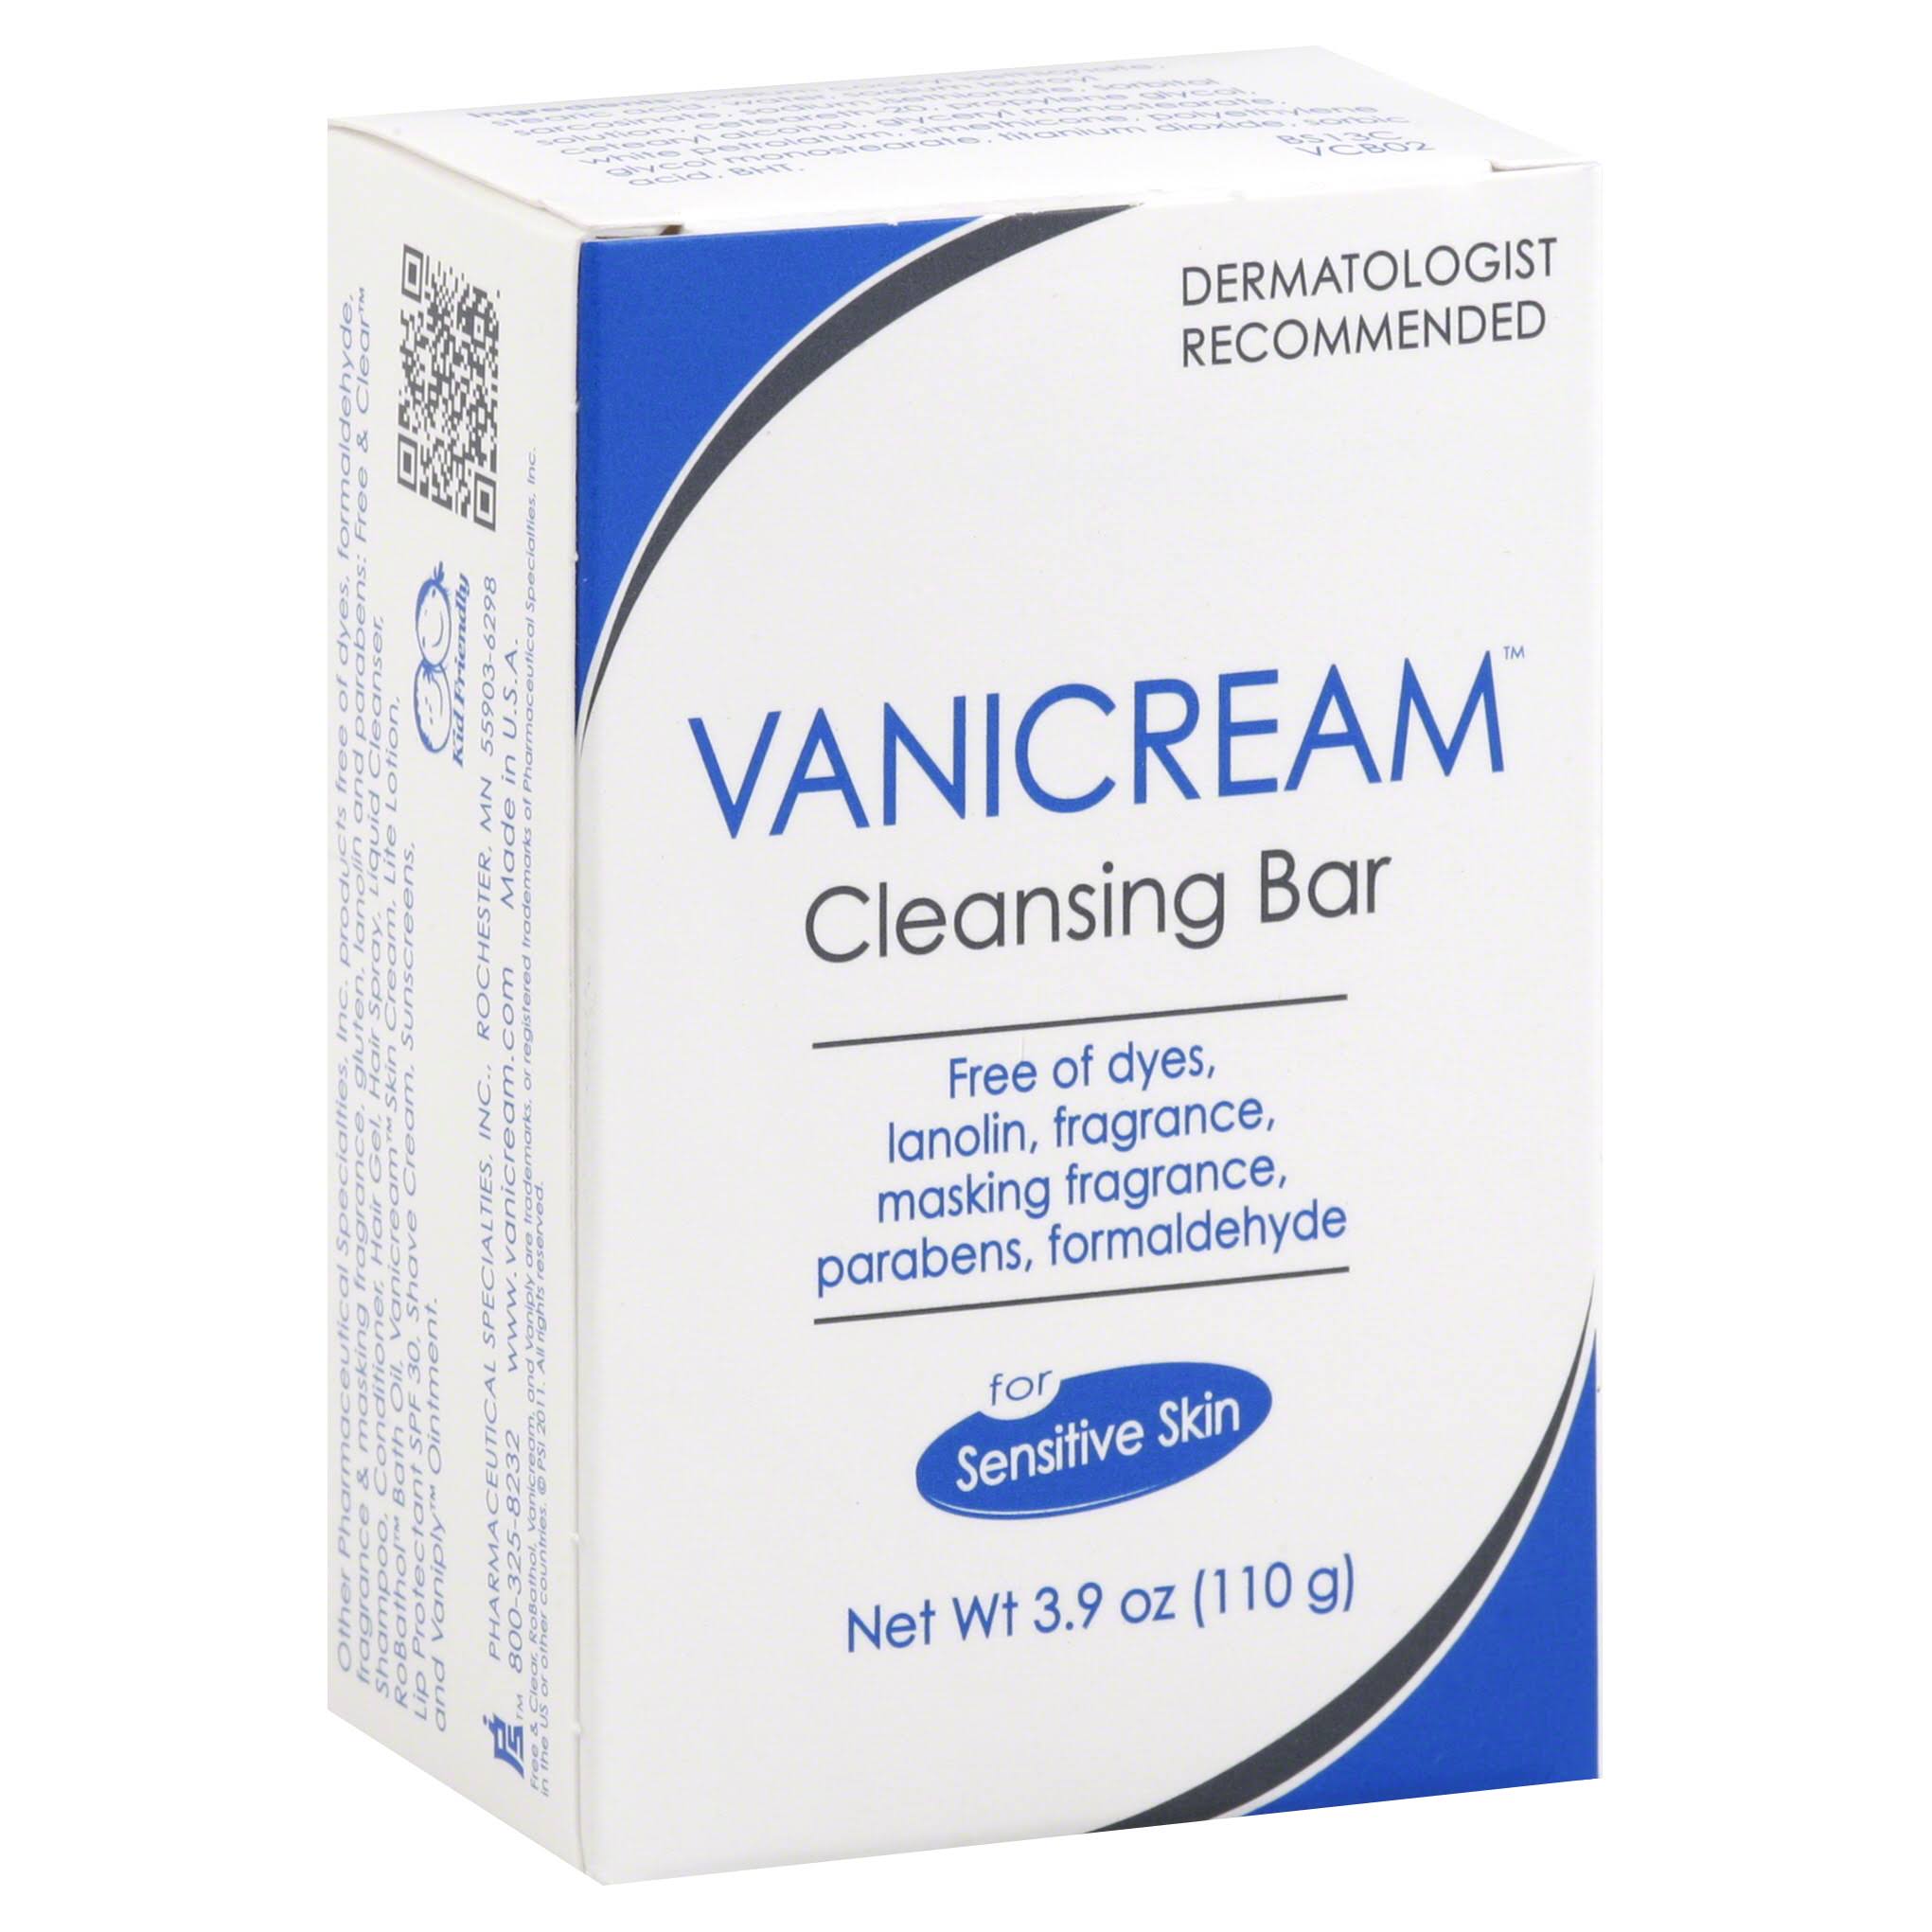 Vanicream Cleansing Bar - for Sensitive Skin, 3.9oz